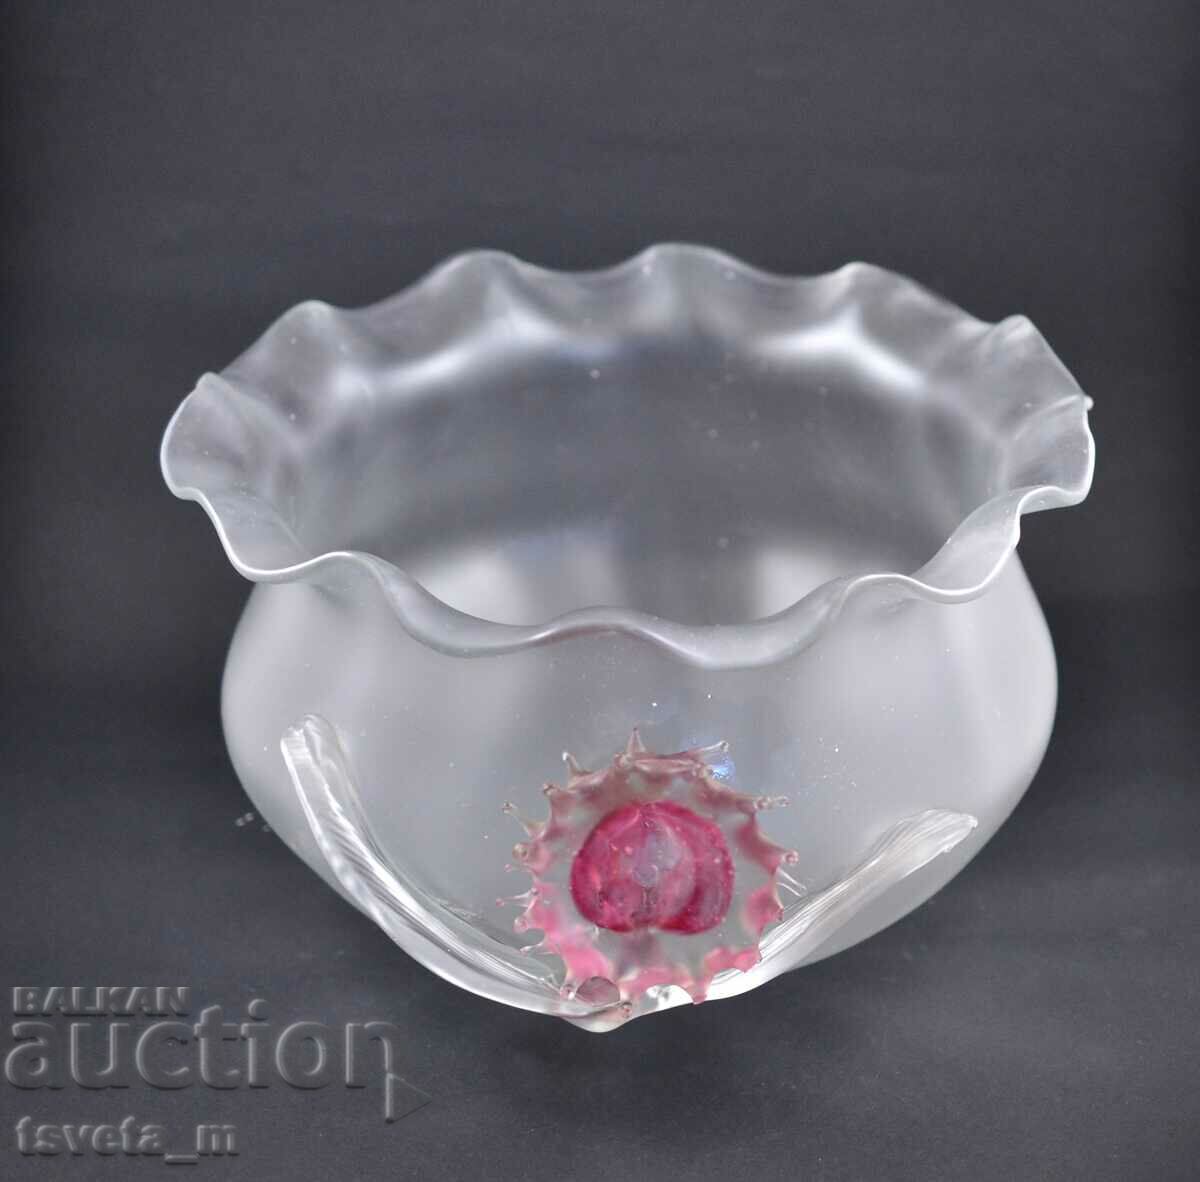 Handmade glass bowl bowl